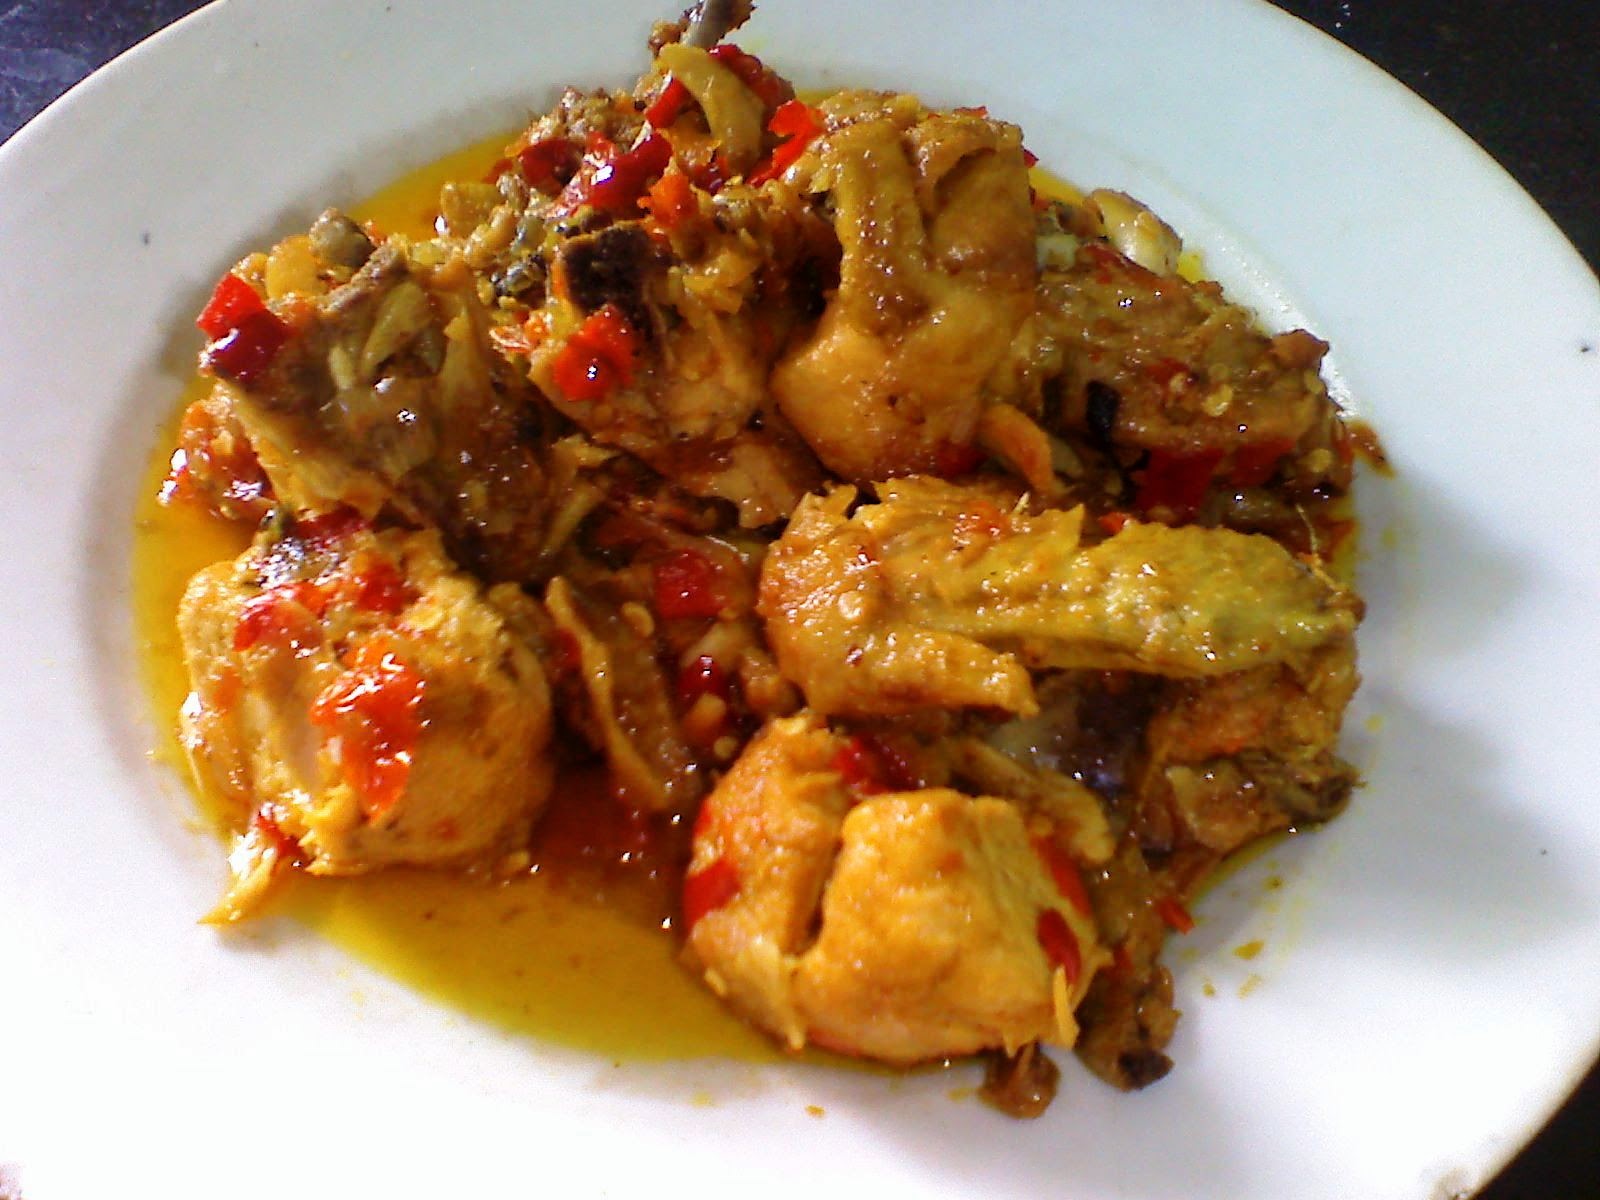 Kumpulan resep masakan online: Resep Ayam Rica RIca khas ...